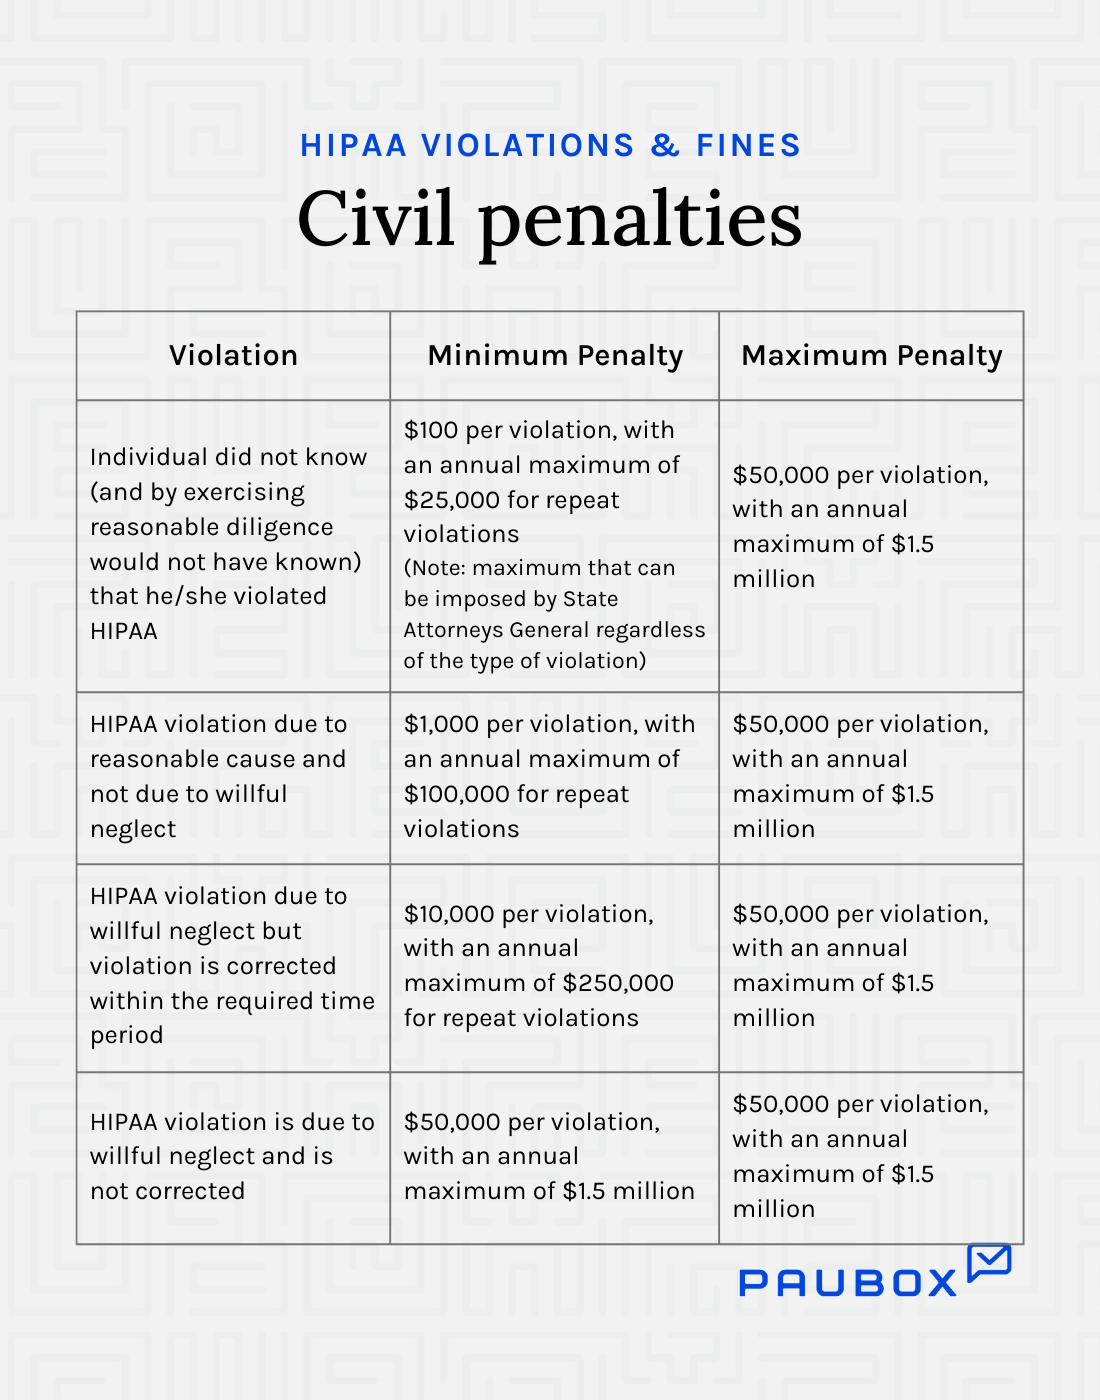 HIPAA violations and fines: Civil penalties